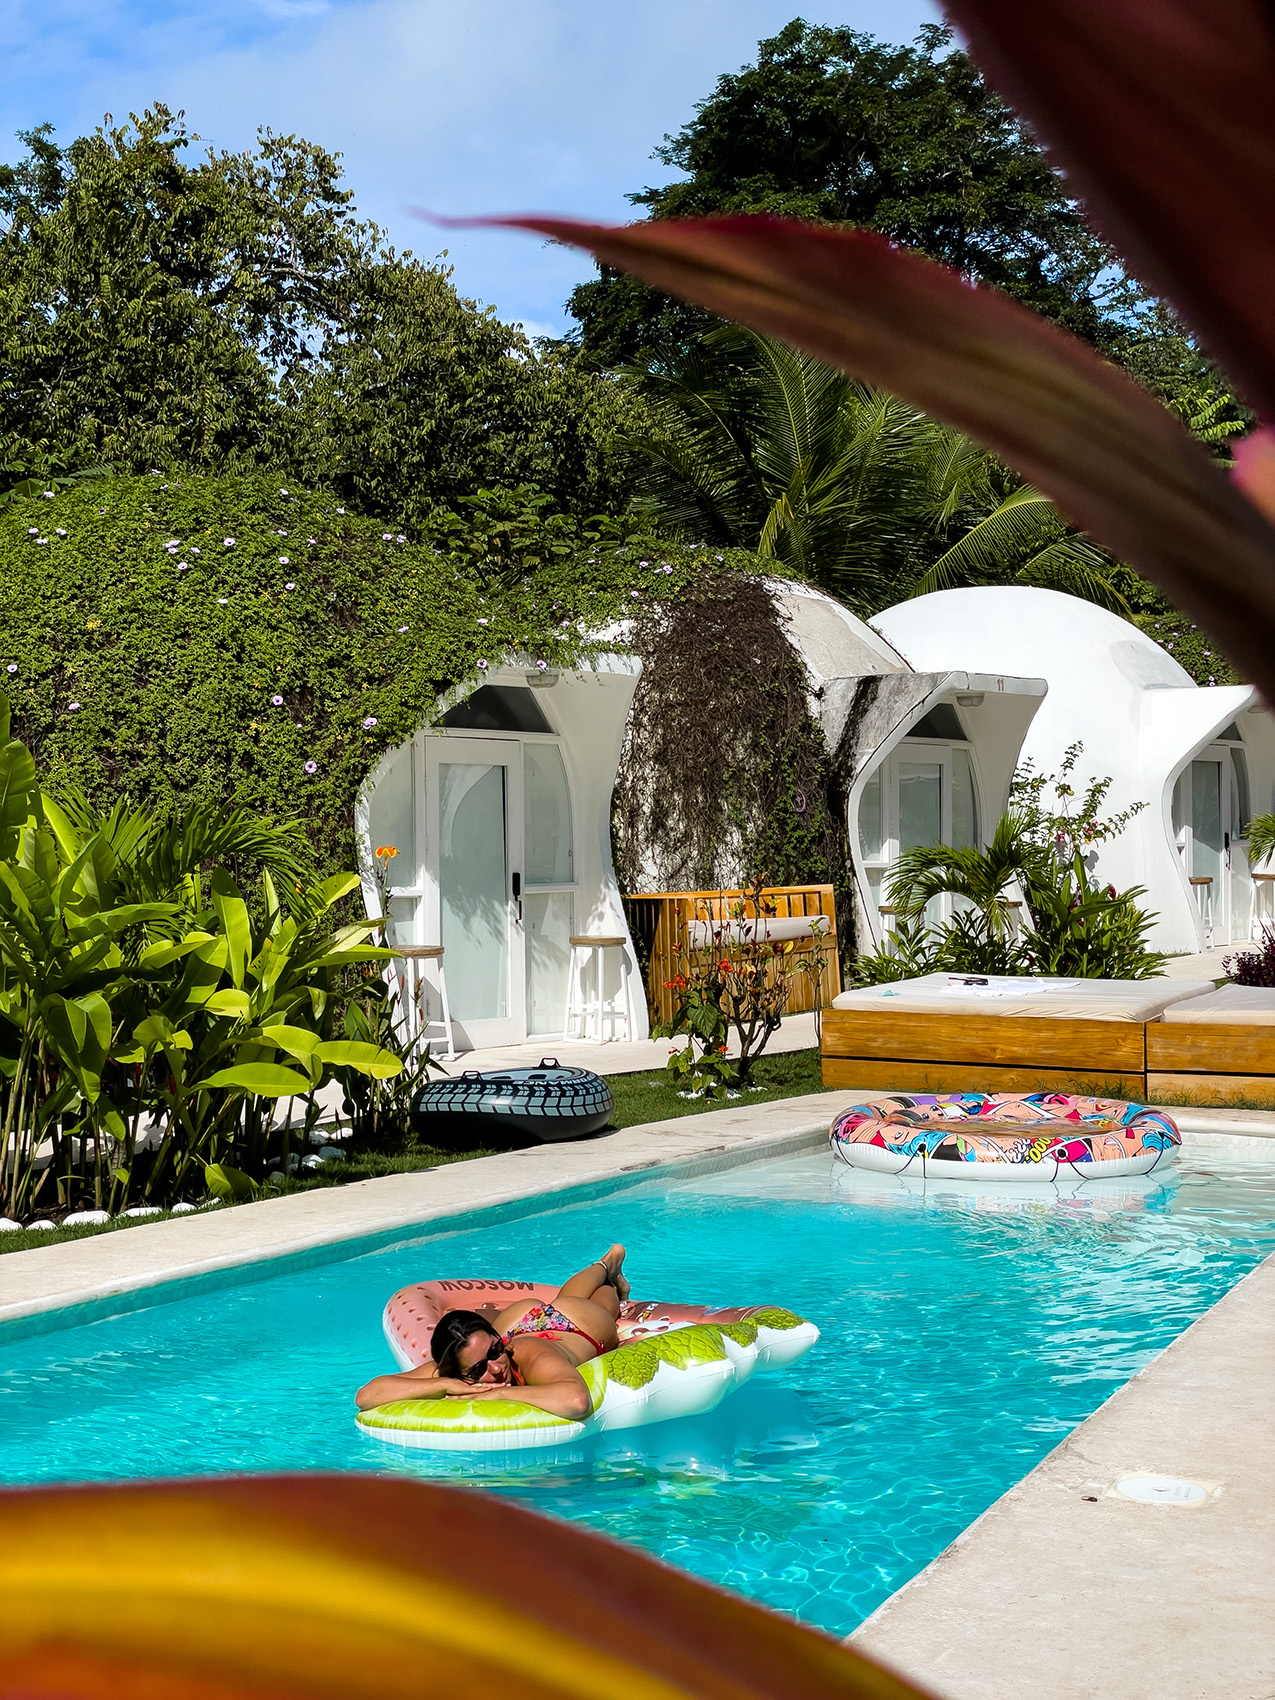 Swimming pool at Igloo Beach Lodge in Manuel Antonio